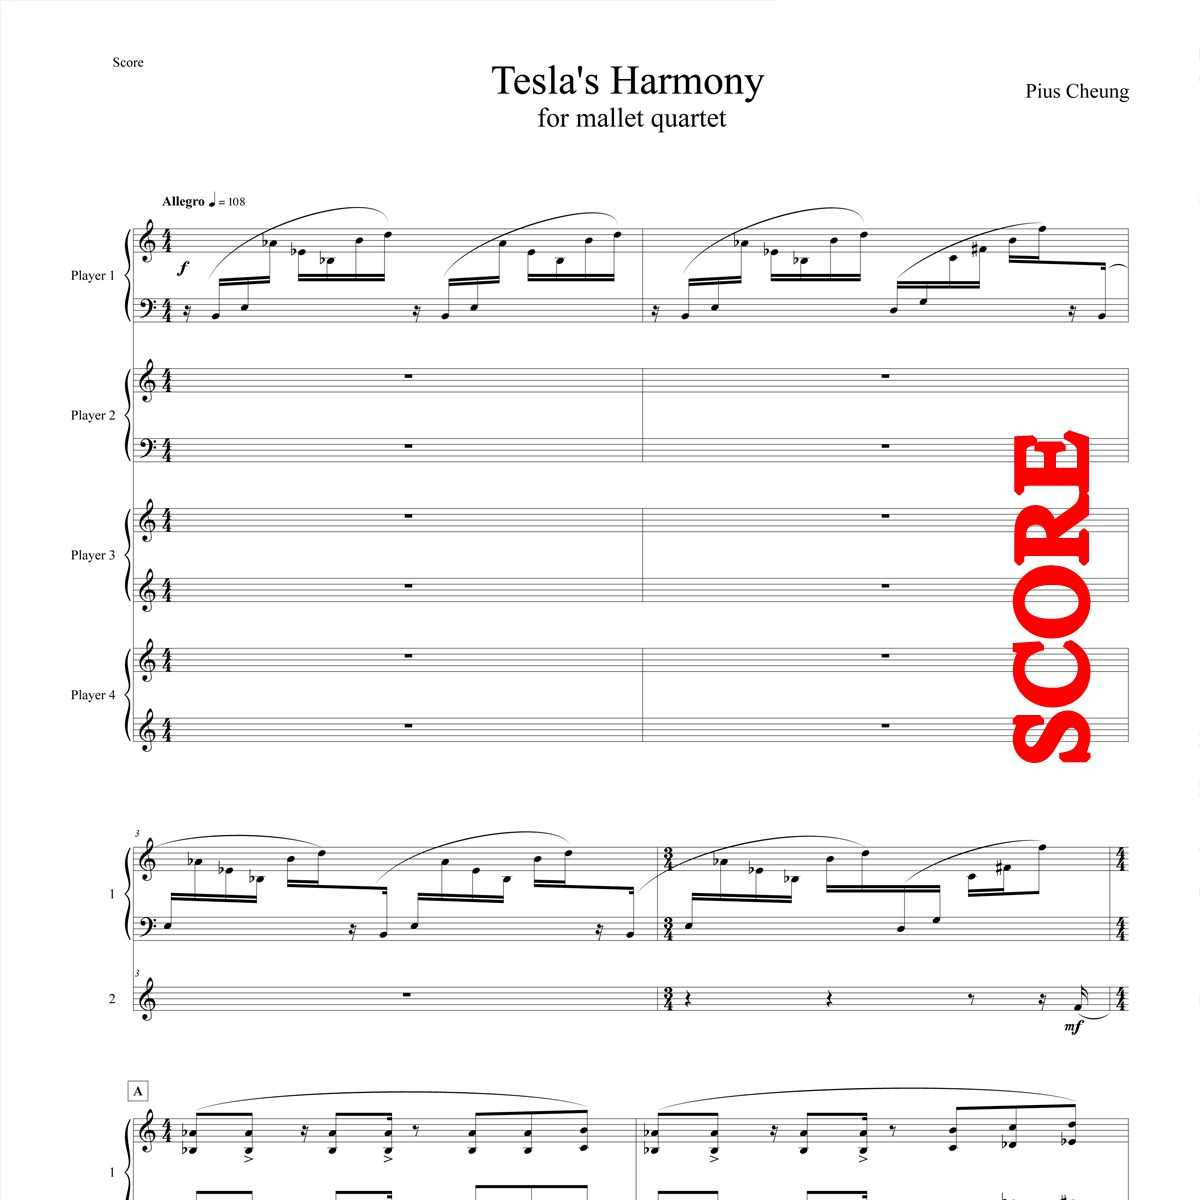 Tesla's Harmony by Pius Cheung